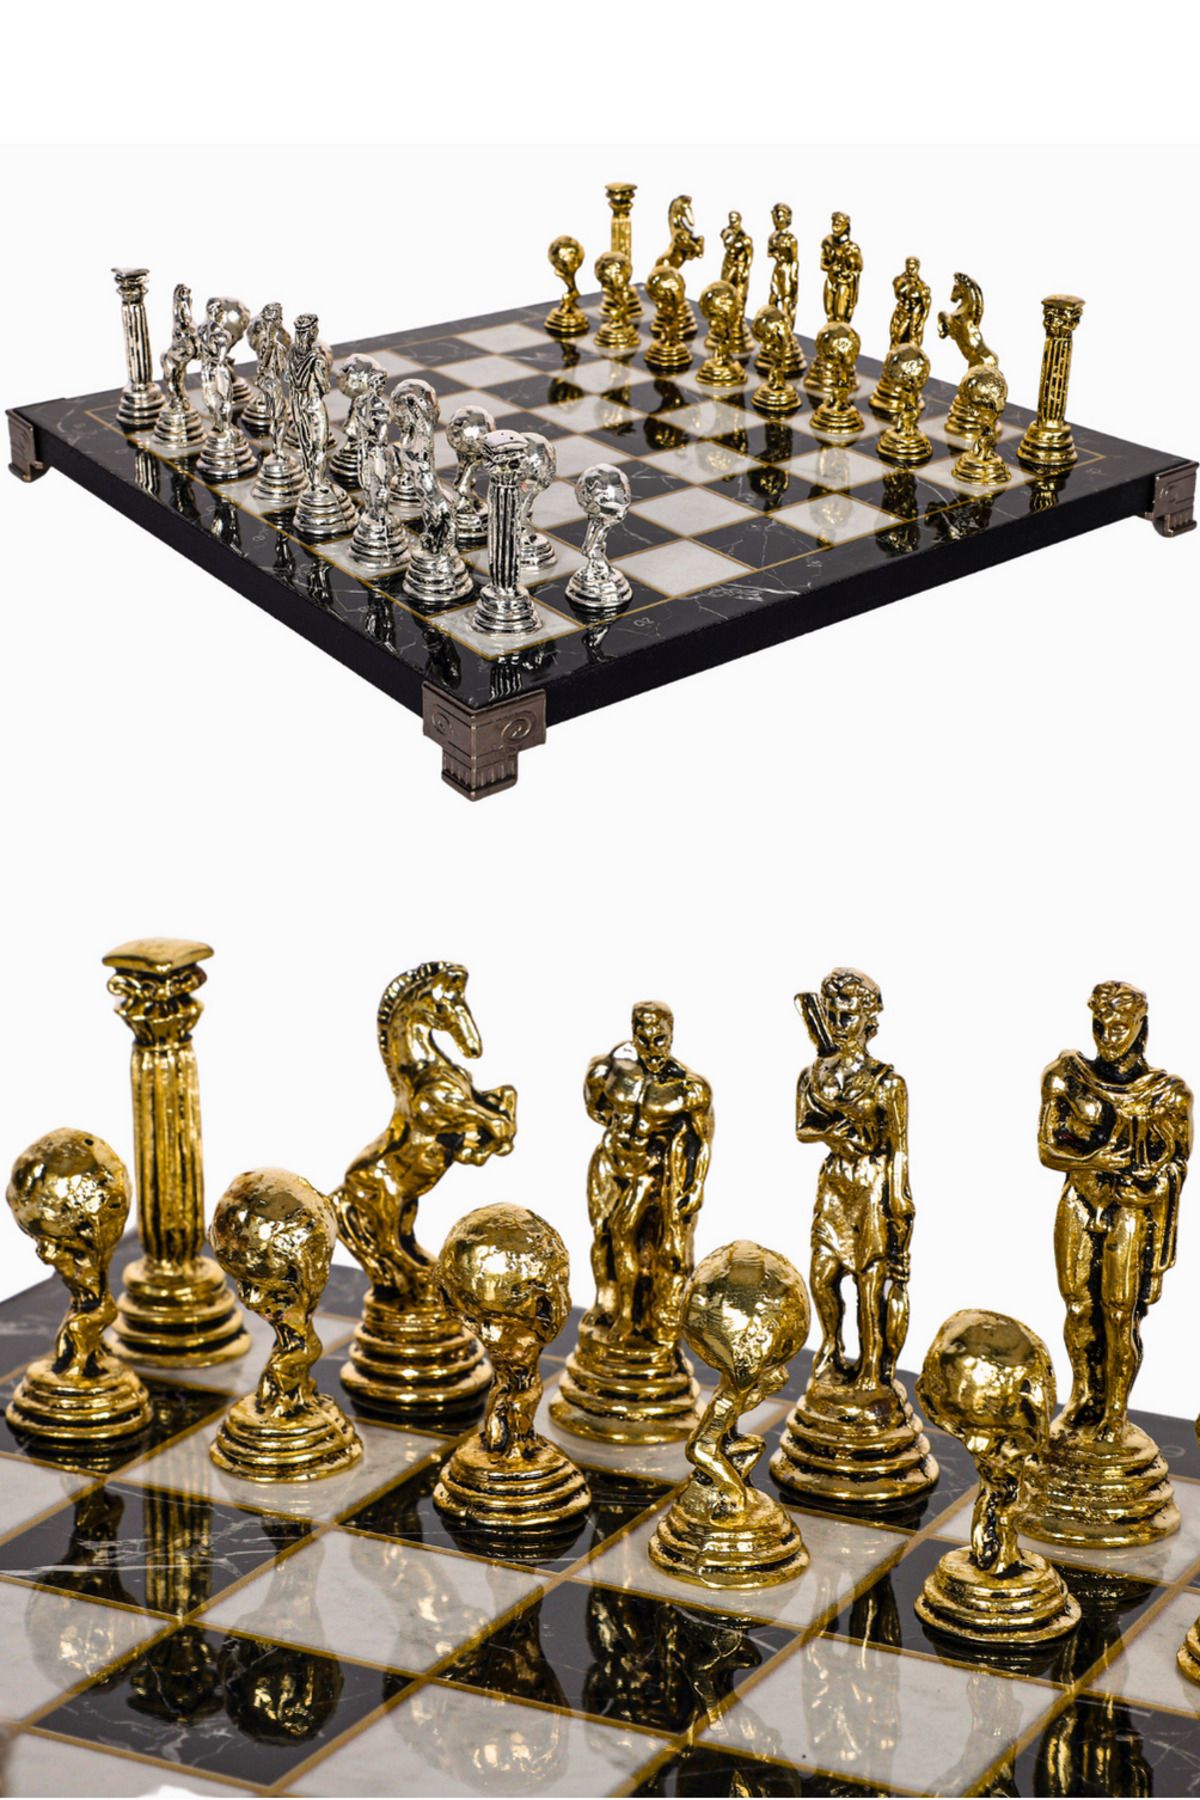 Cooper Chess Metal Satranç Takımı | 30cm Mermer Desenli Satranç Tahtası | Mitoloji Titan Atlas Herkül Figürlü